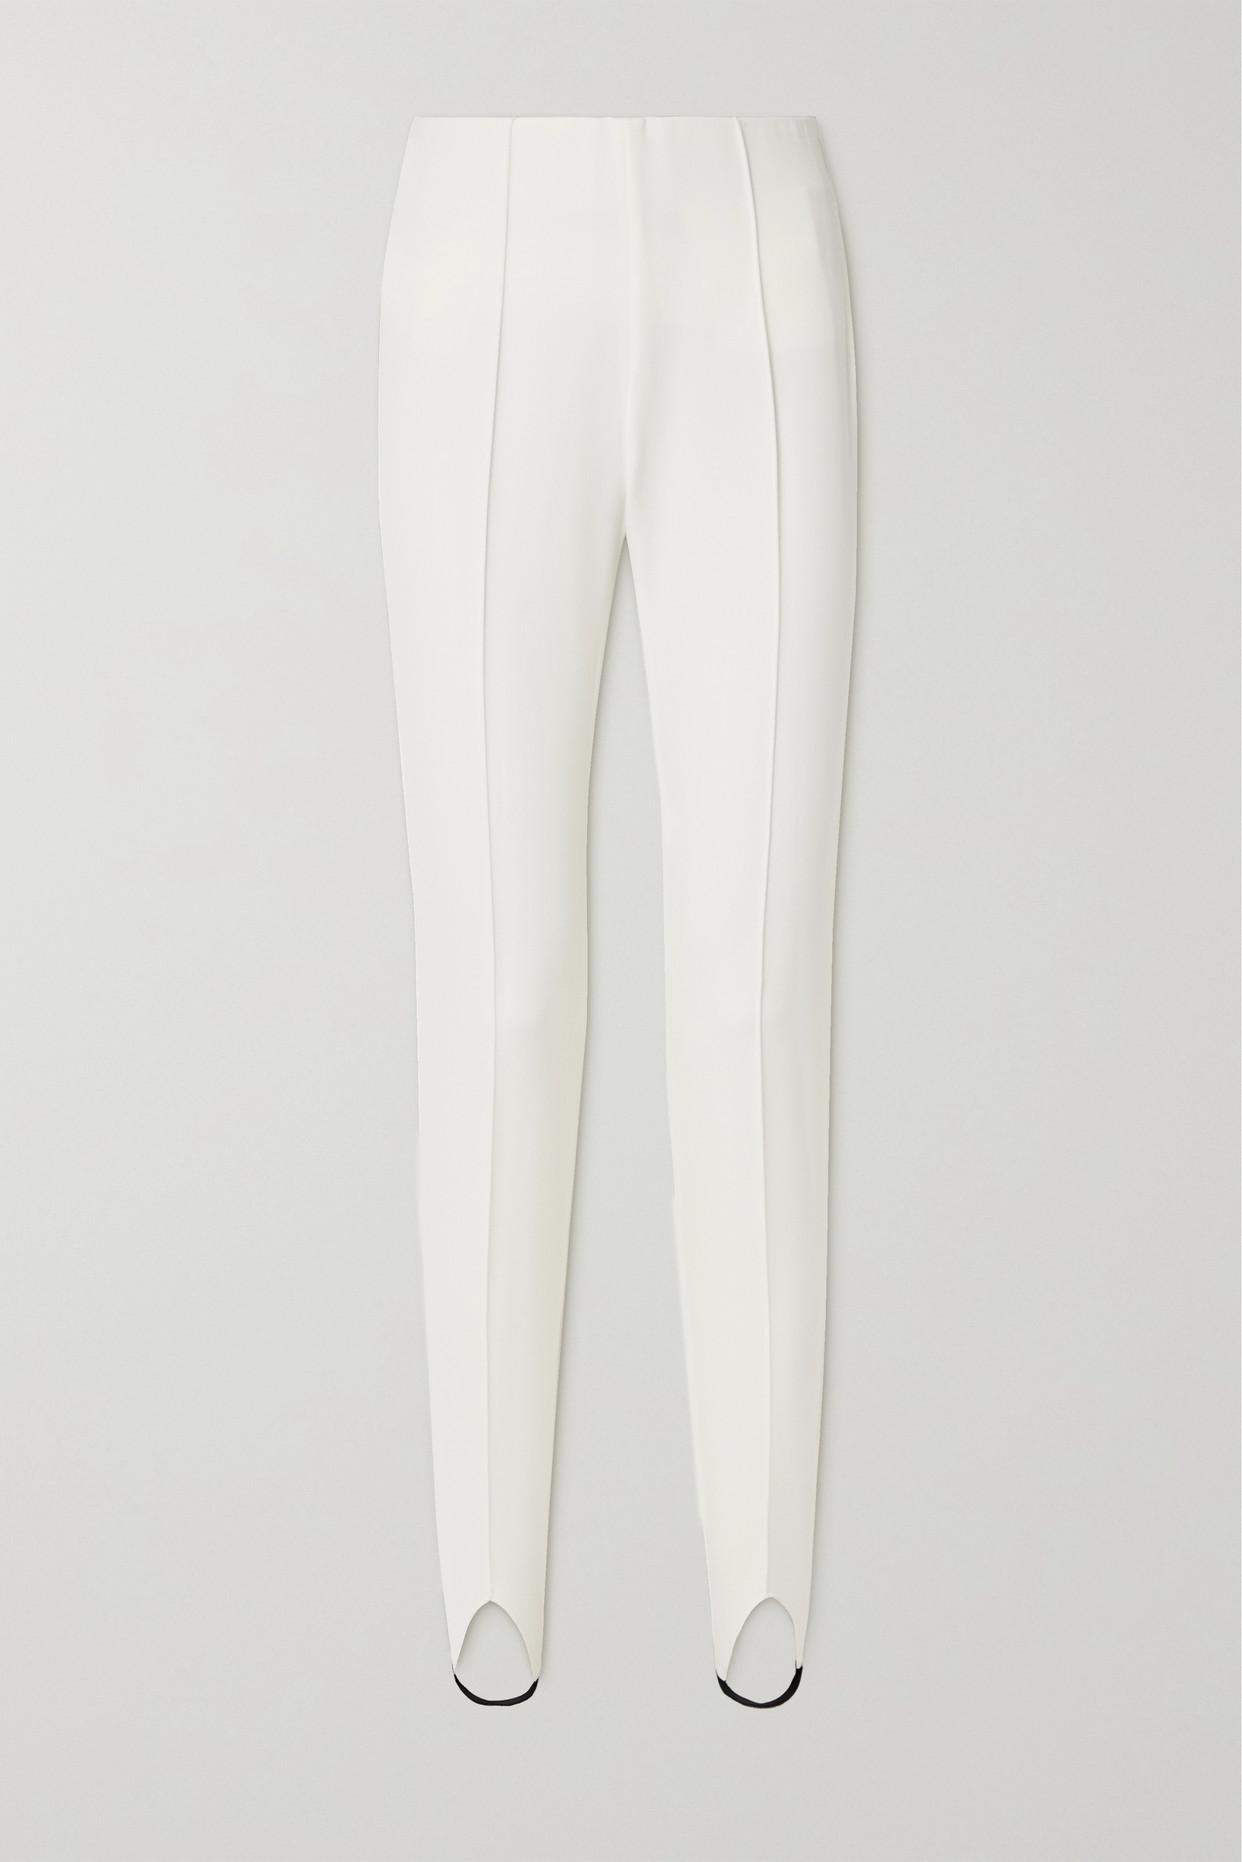 Bogner Elaine Stretch Stirrup Ski Pants in White | Lyst